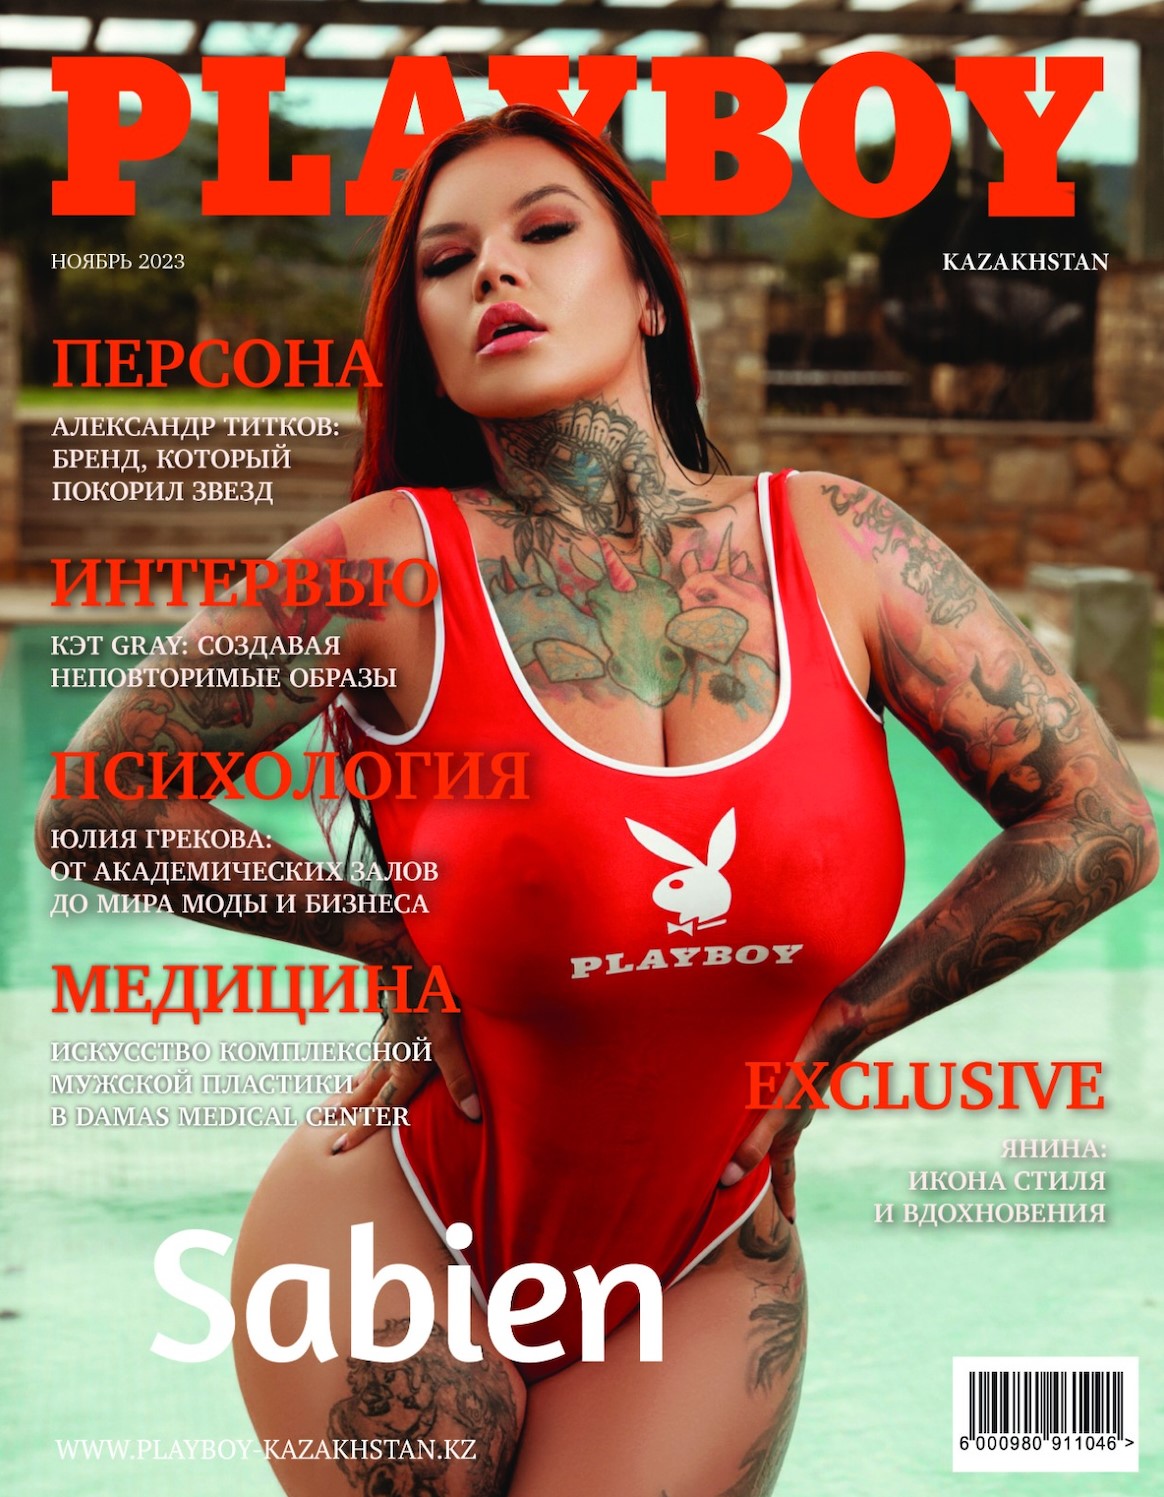 Sabien DeMonia Scores Third Playboy Cover of 2023